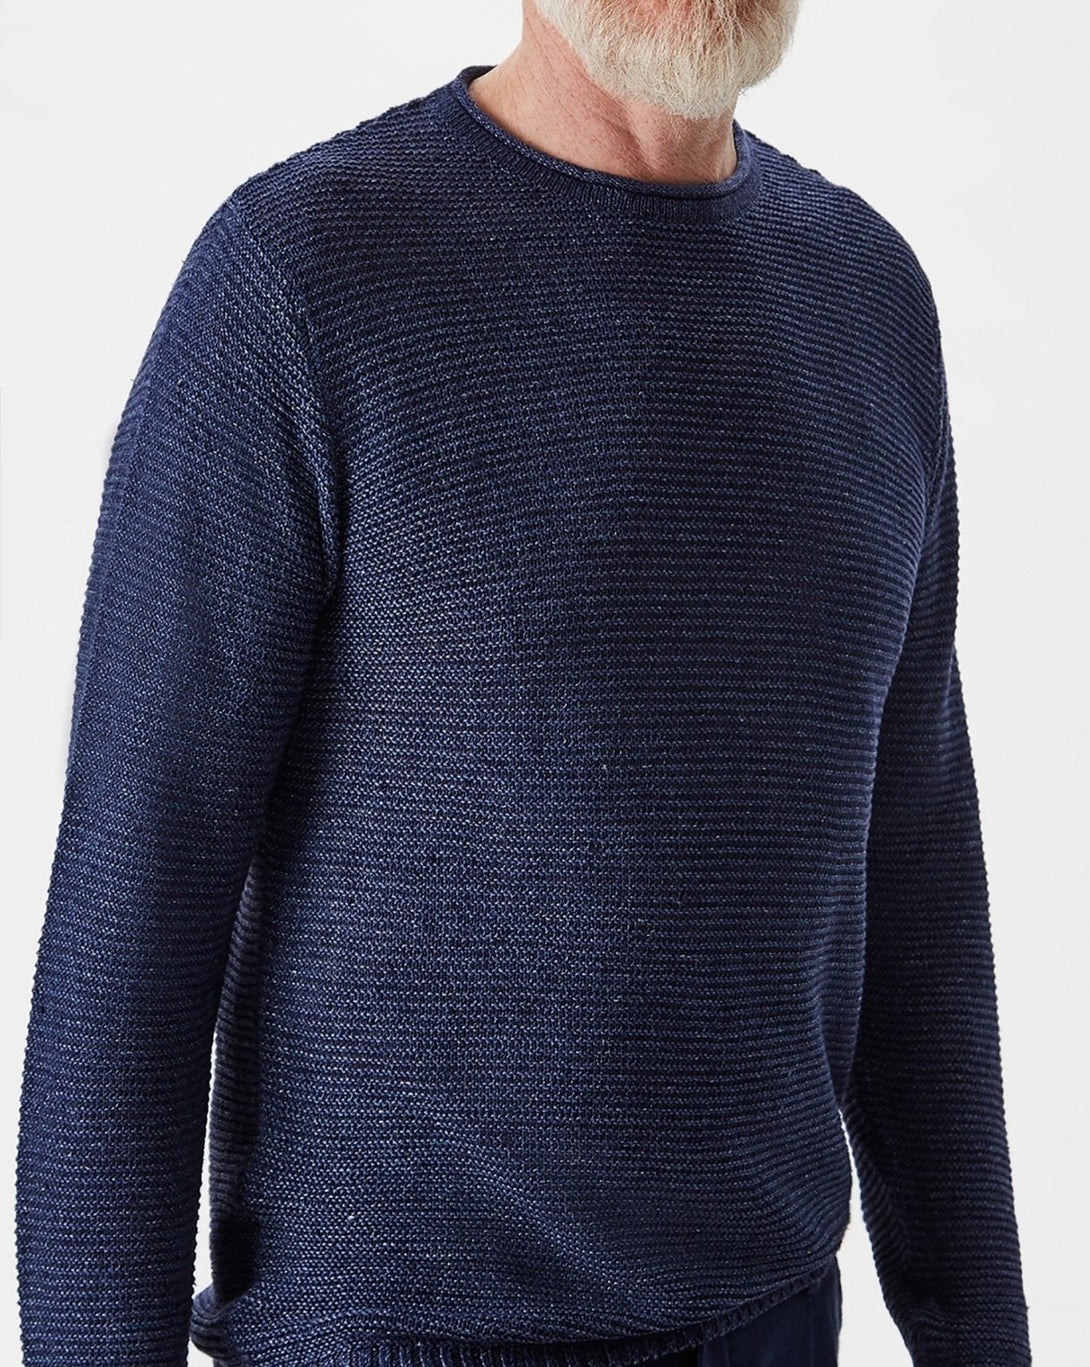 Men Jersey | Navy Blue Rustic Linen Crew Neck Sweater by Spanish designer Adolfo Dominguez